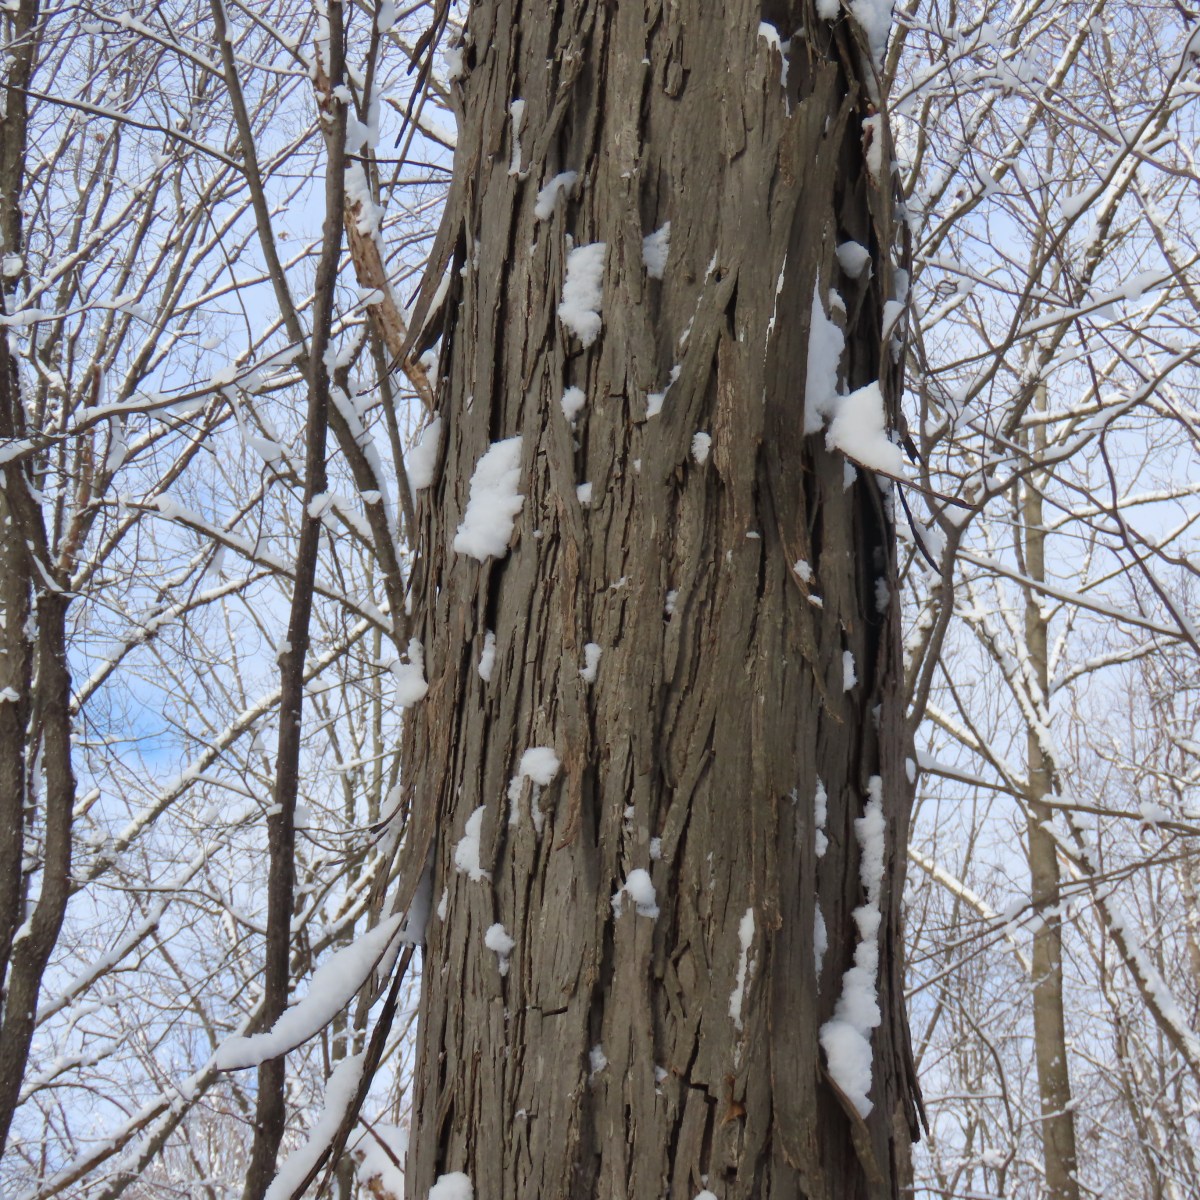 Shagbark Hickory tree with snow on it